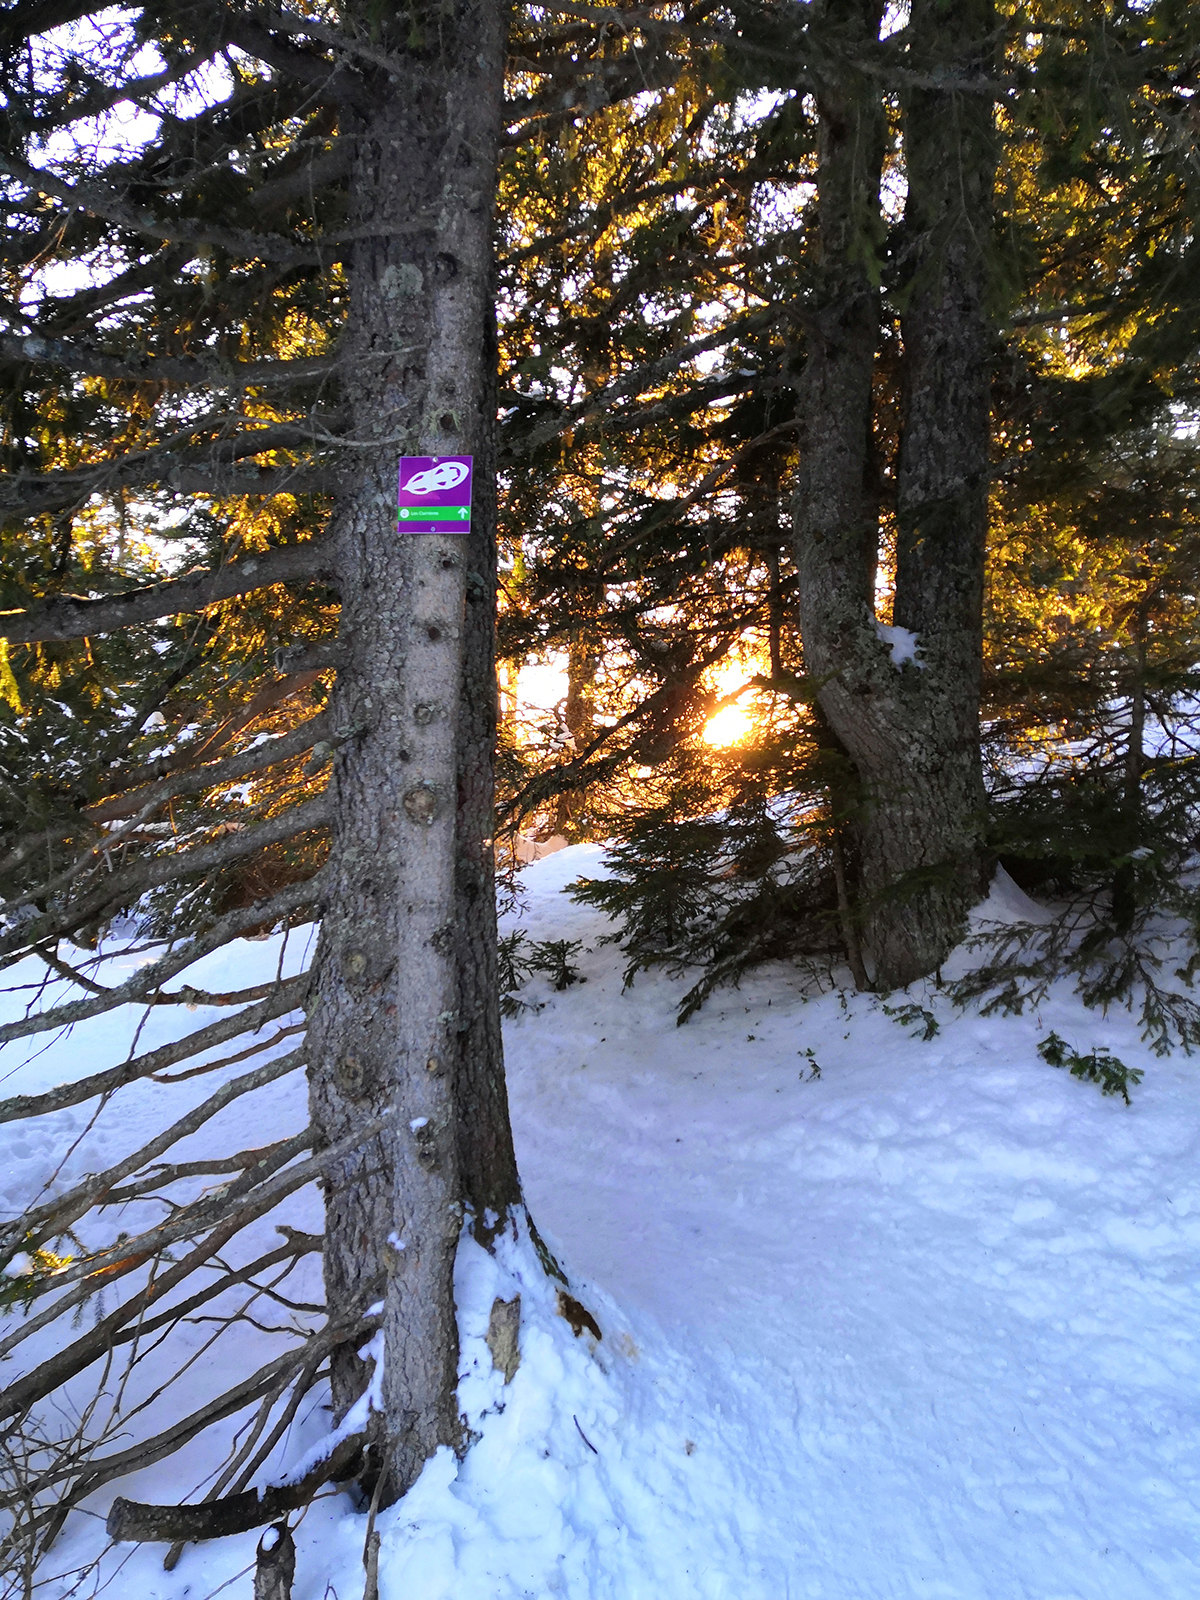 Chamrousse balade coucher soleil en amoureux plateau arselle station montagne ski grenoble isère alpes france - © EM - OT Chamrousse